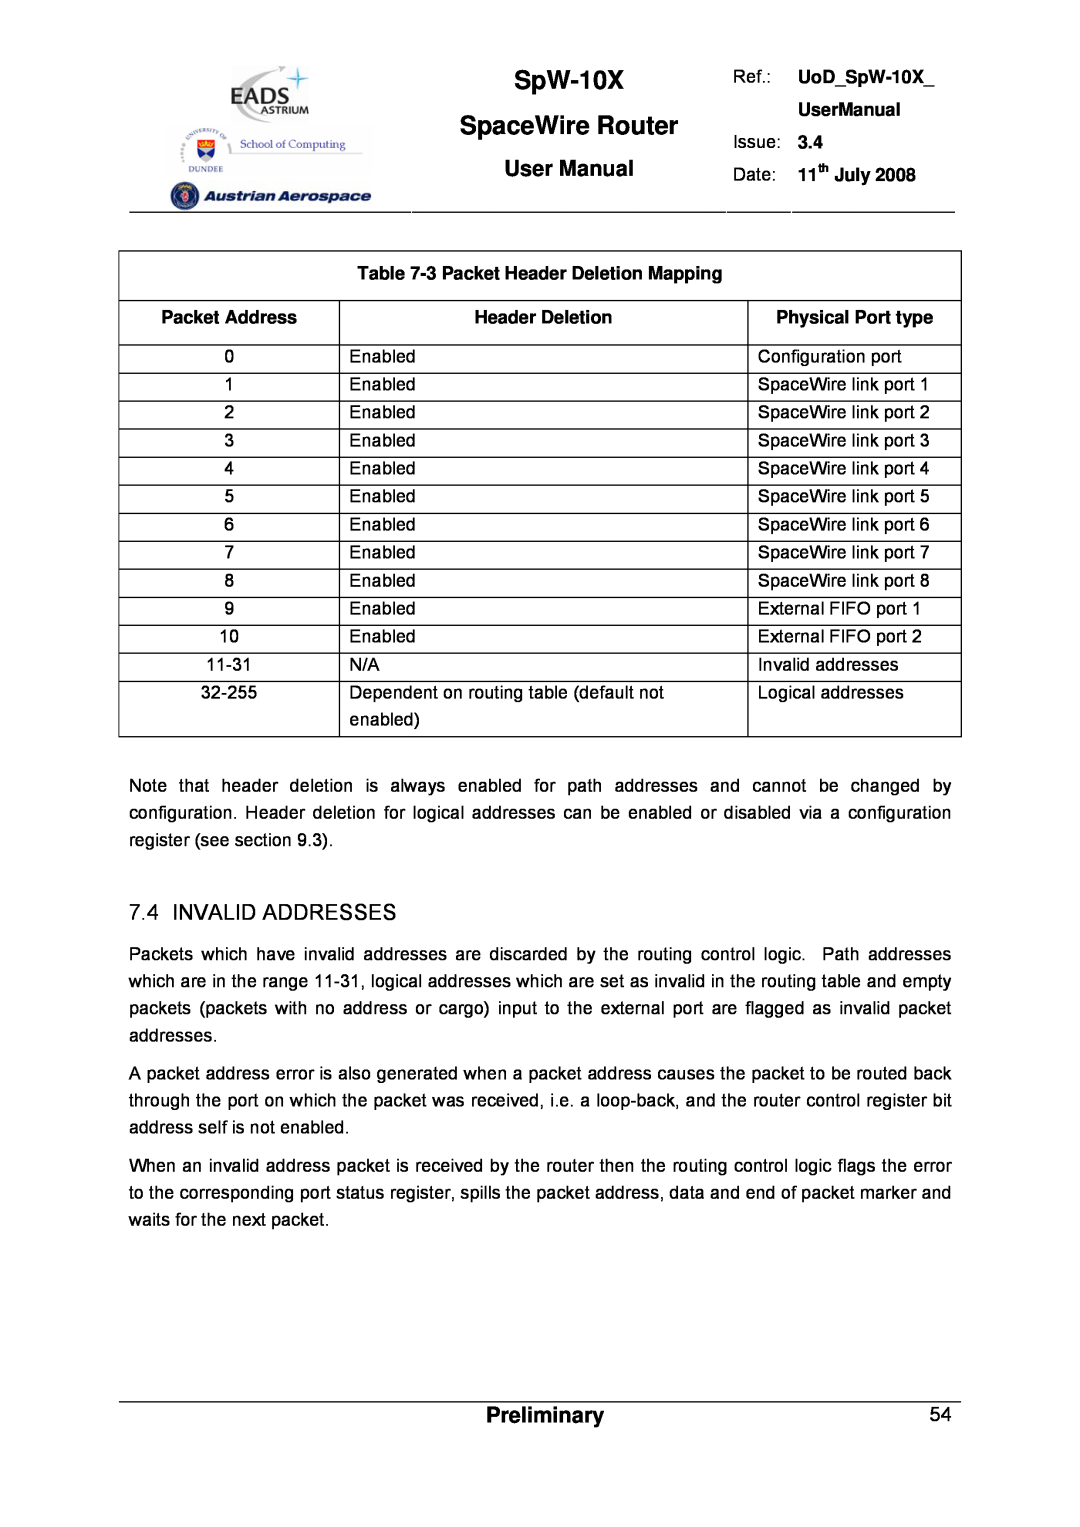 Atmel SpW-10X user manual Invalid Addresses, SpaceWire Router, User Manual, Preliminary 